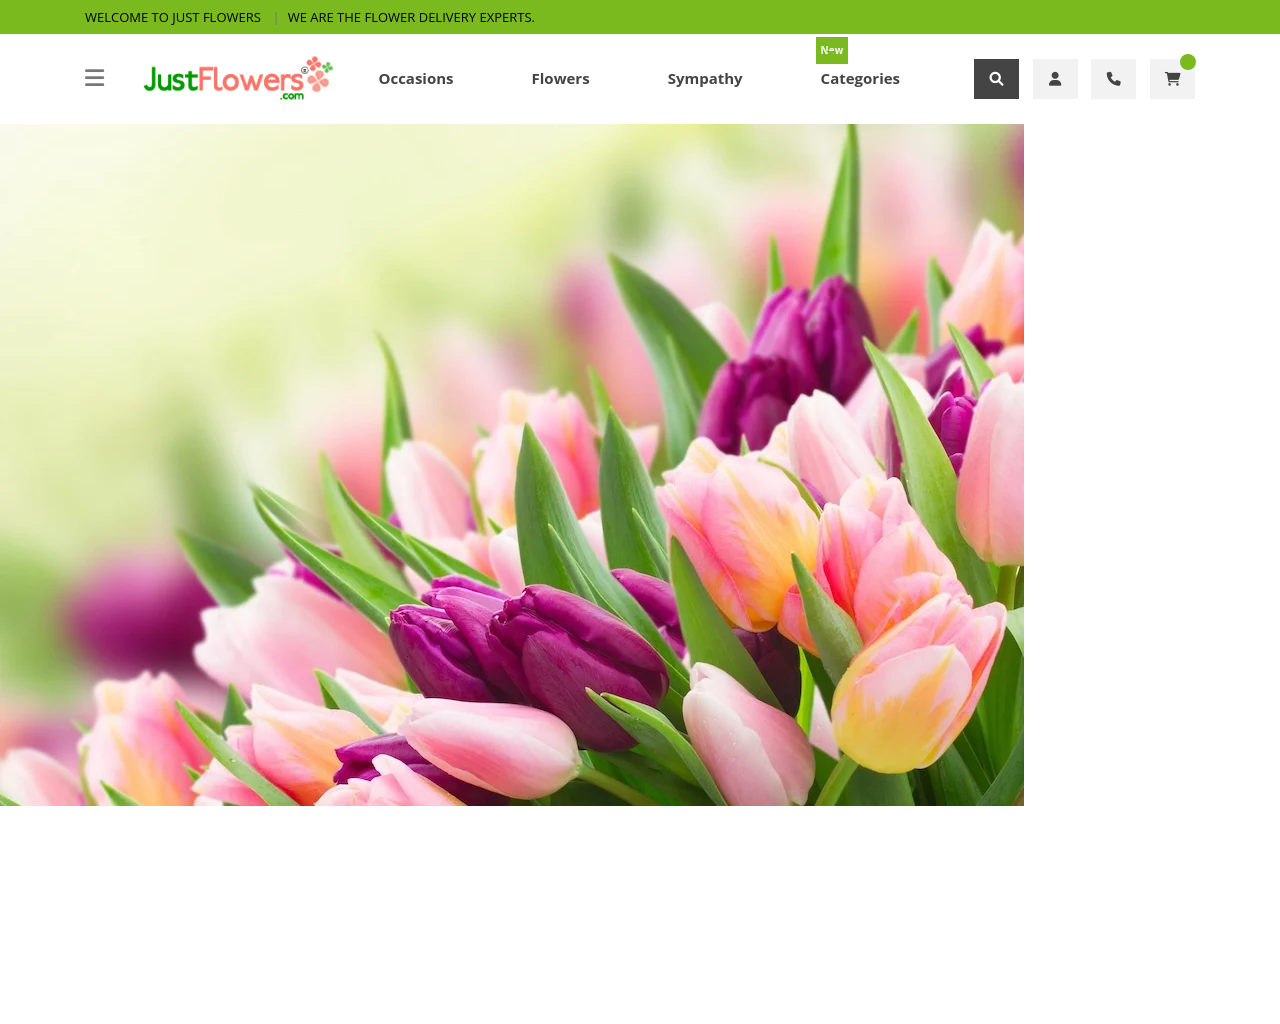 justflowers.com